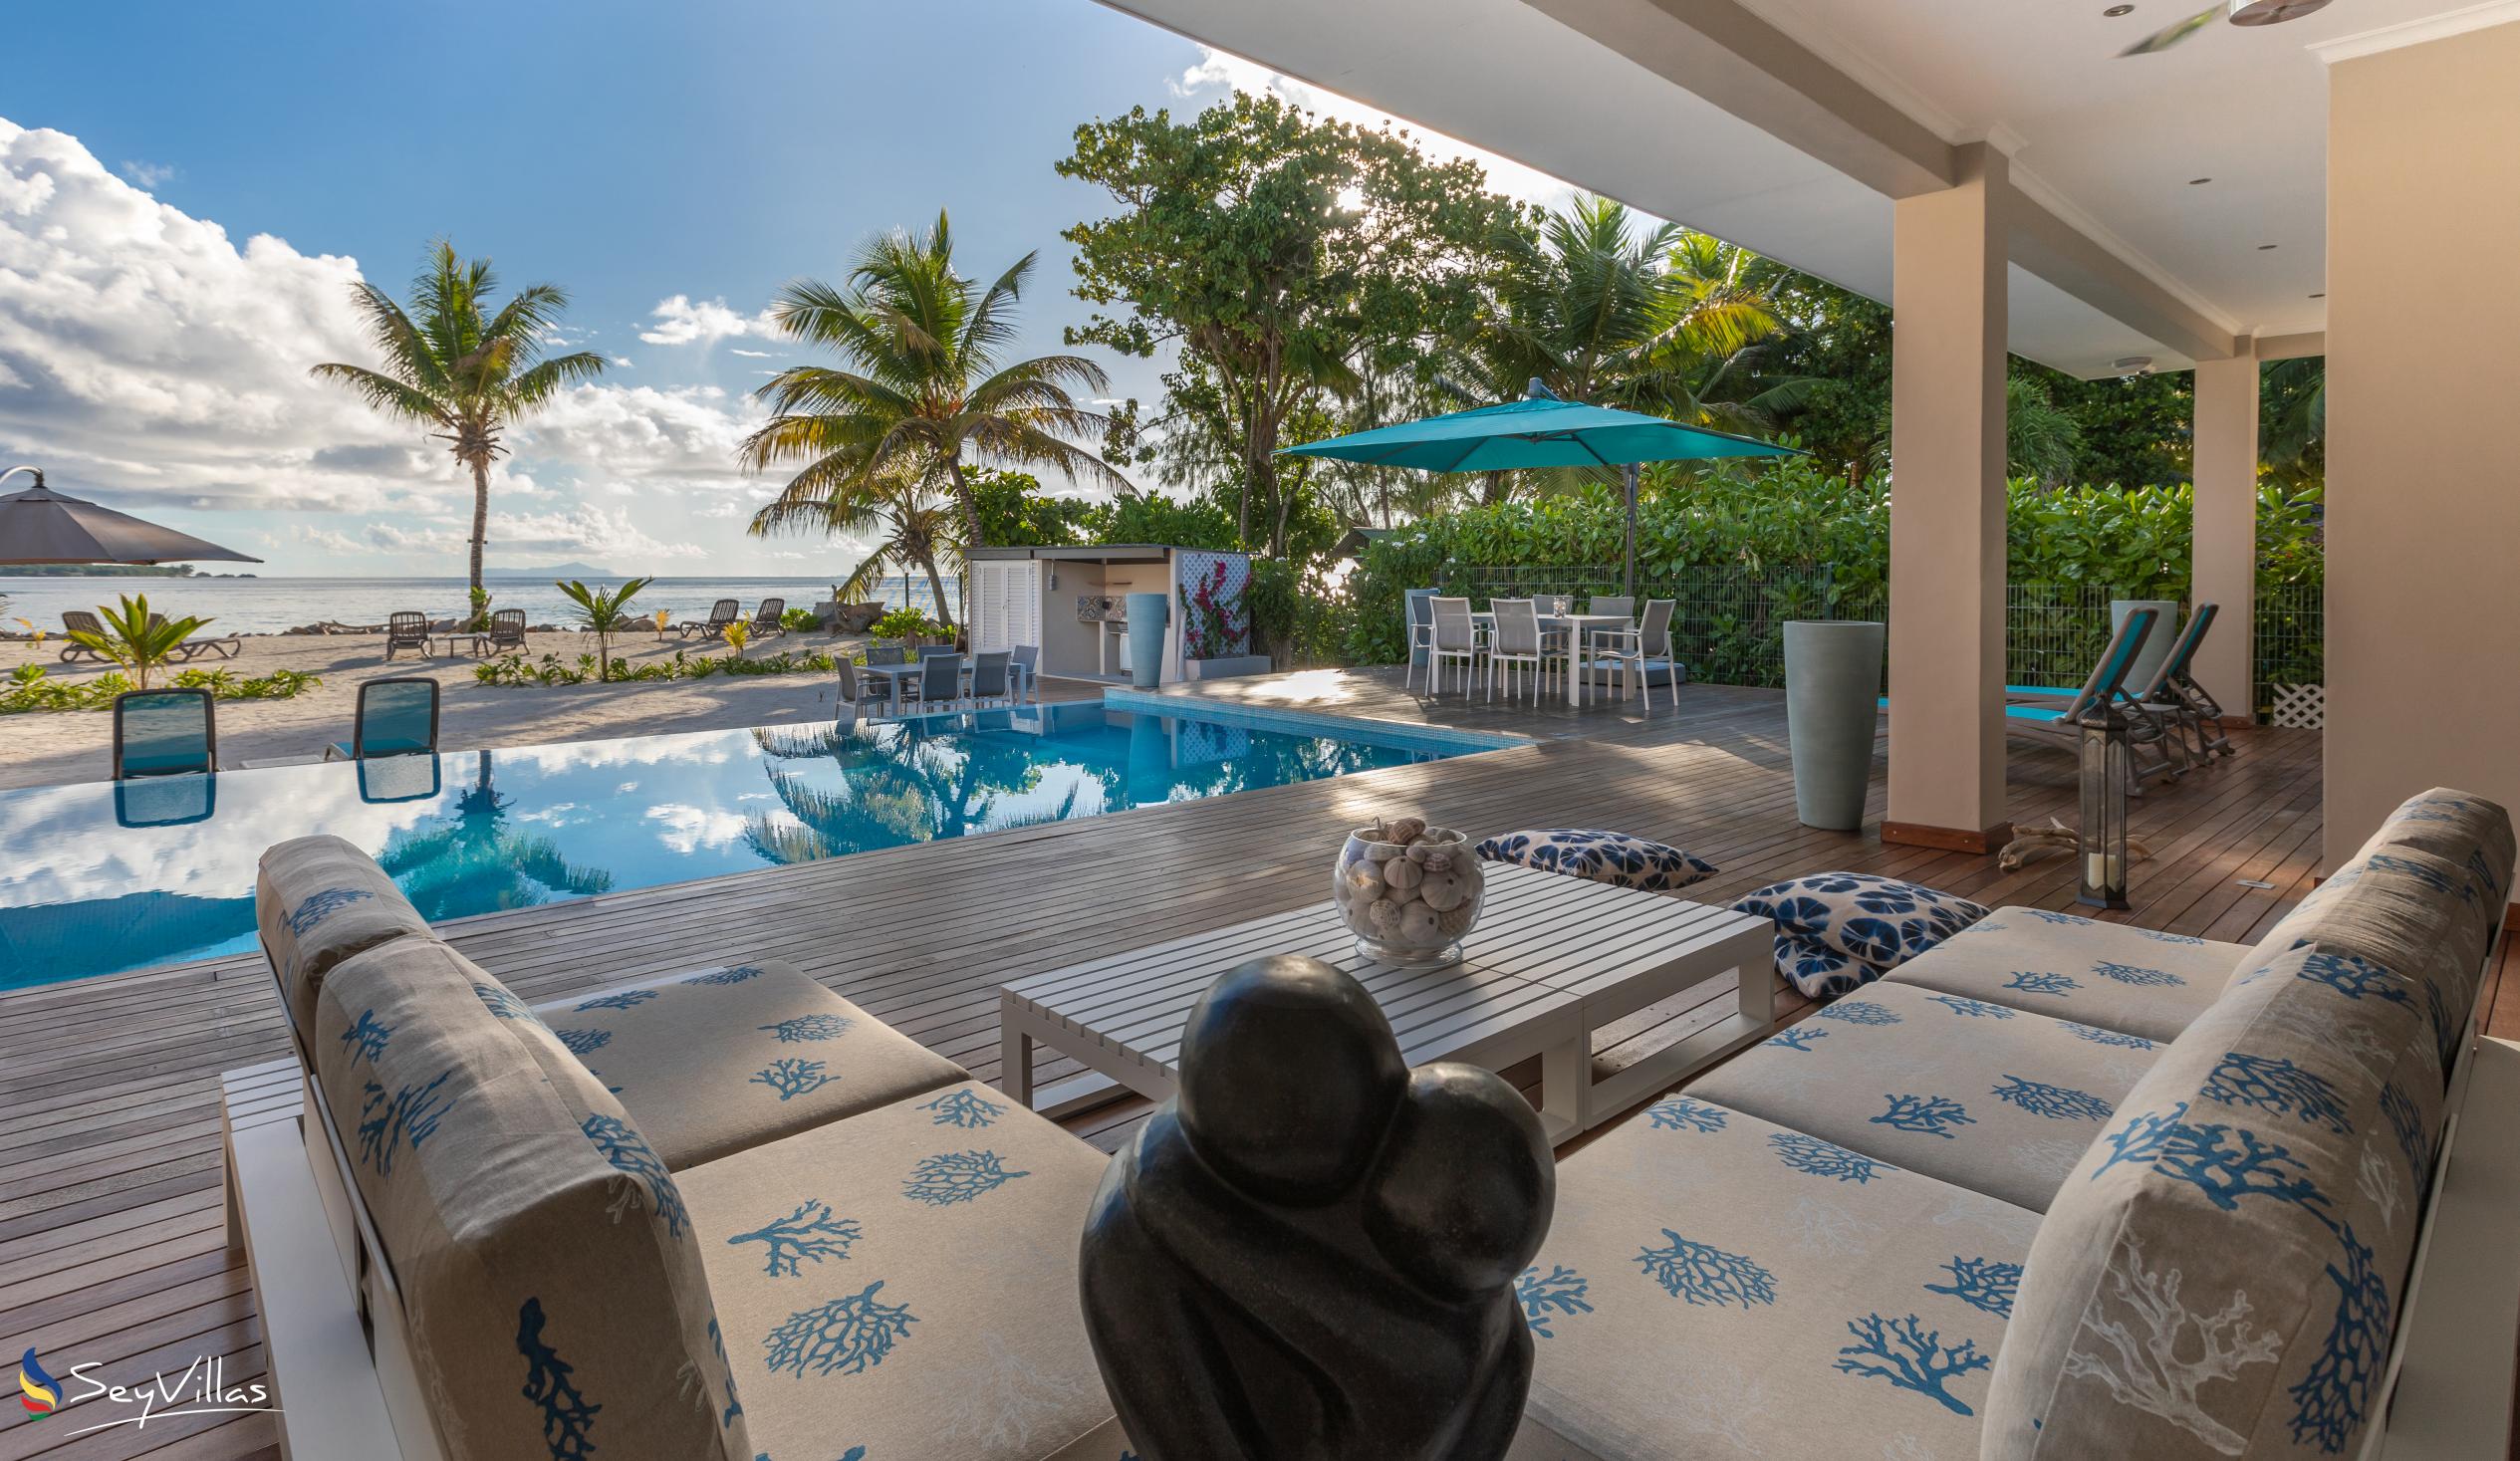 Foto 47: Villas Coco Beach - La Maison Villas Coco Beach - Praslin (Seychellen)